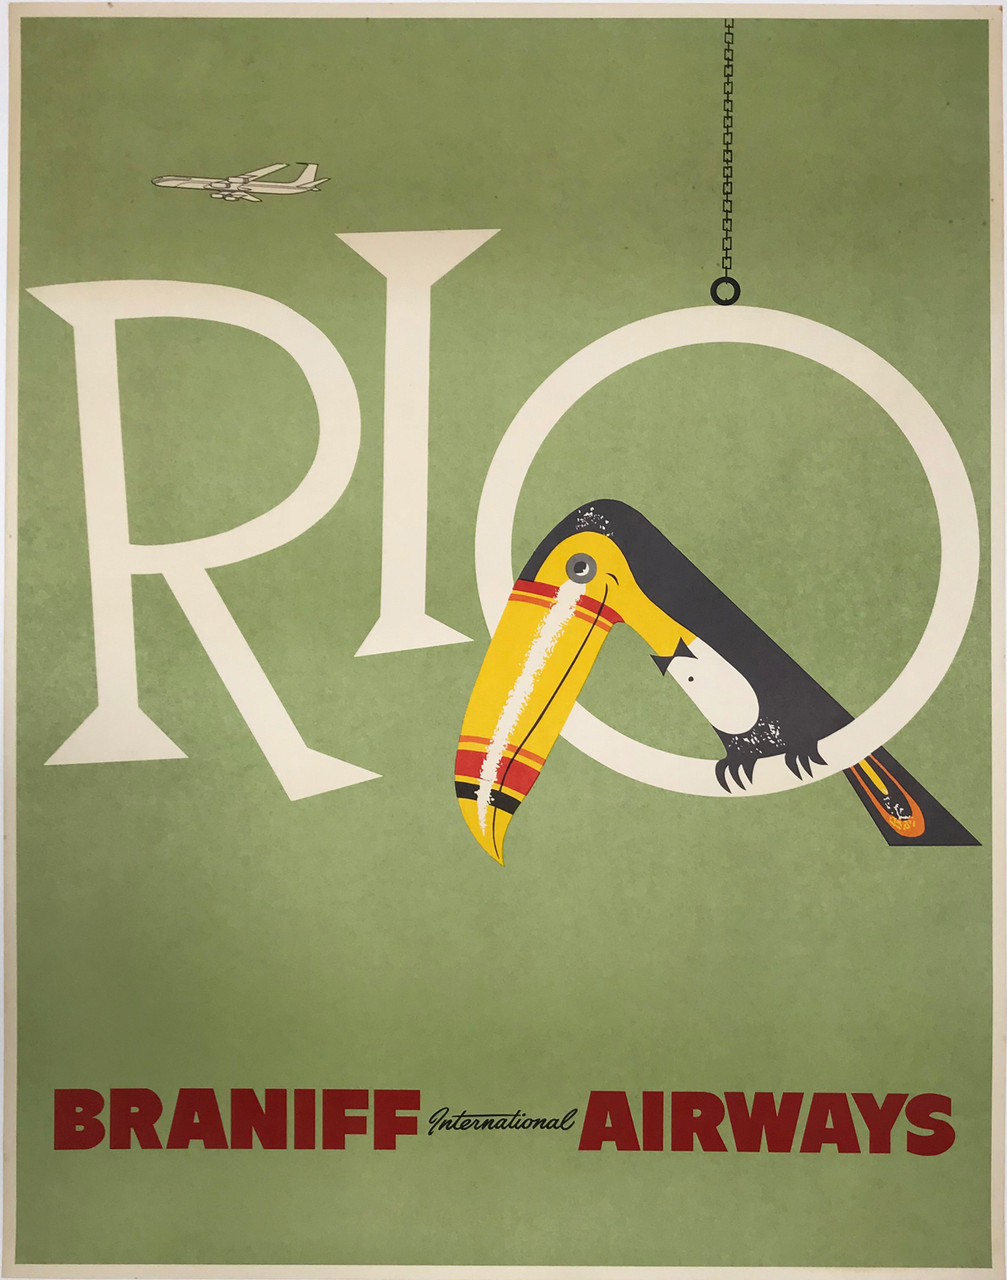 Rio Braniff International Airways Original 1960 Travel Poster